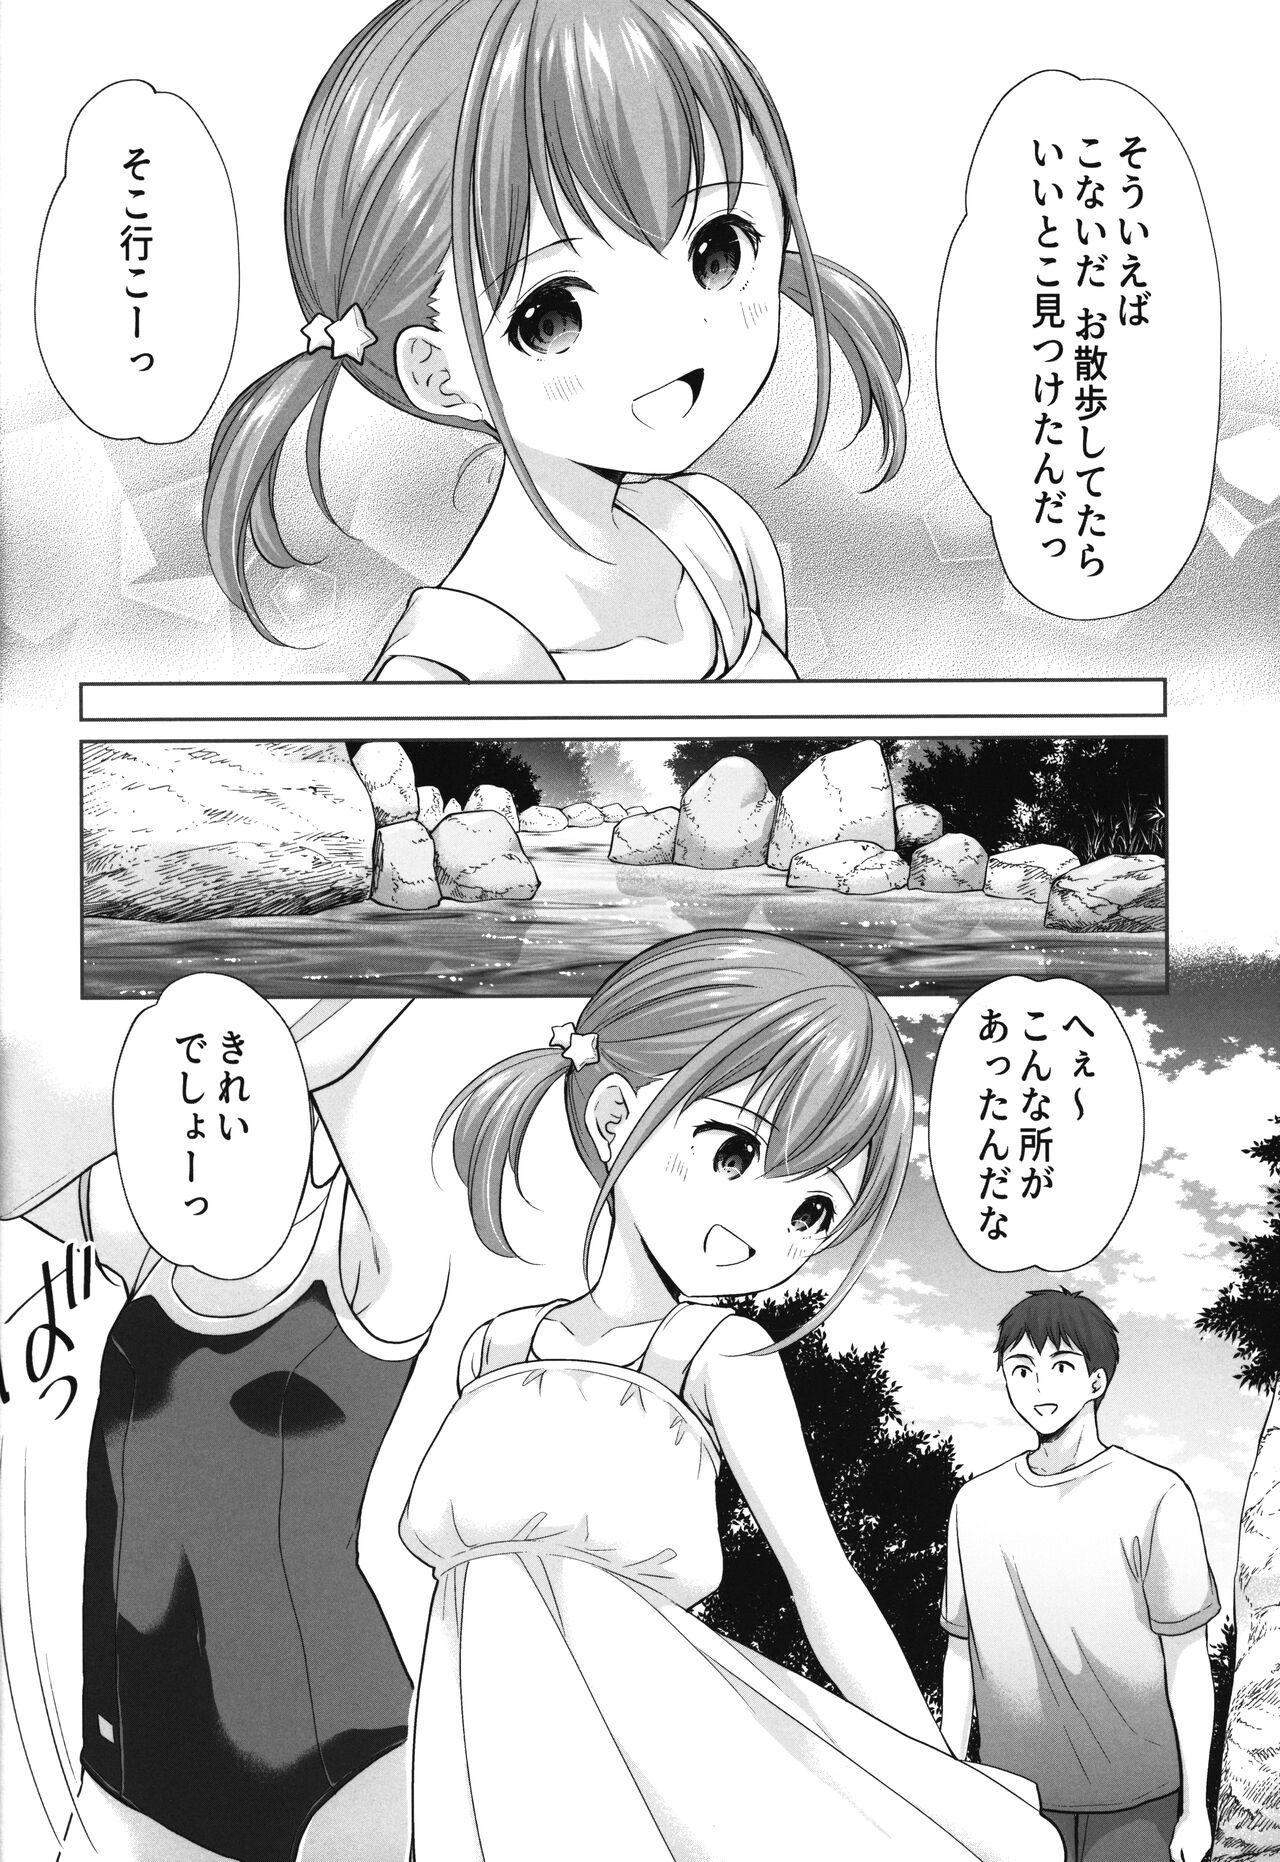 Stripping Ayamachi wa Himegoto no Hajimari 6 - Original Periscope - Page 5